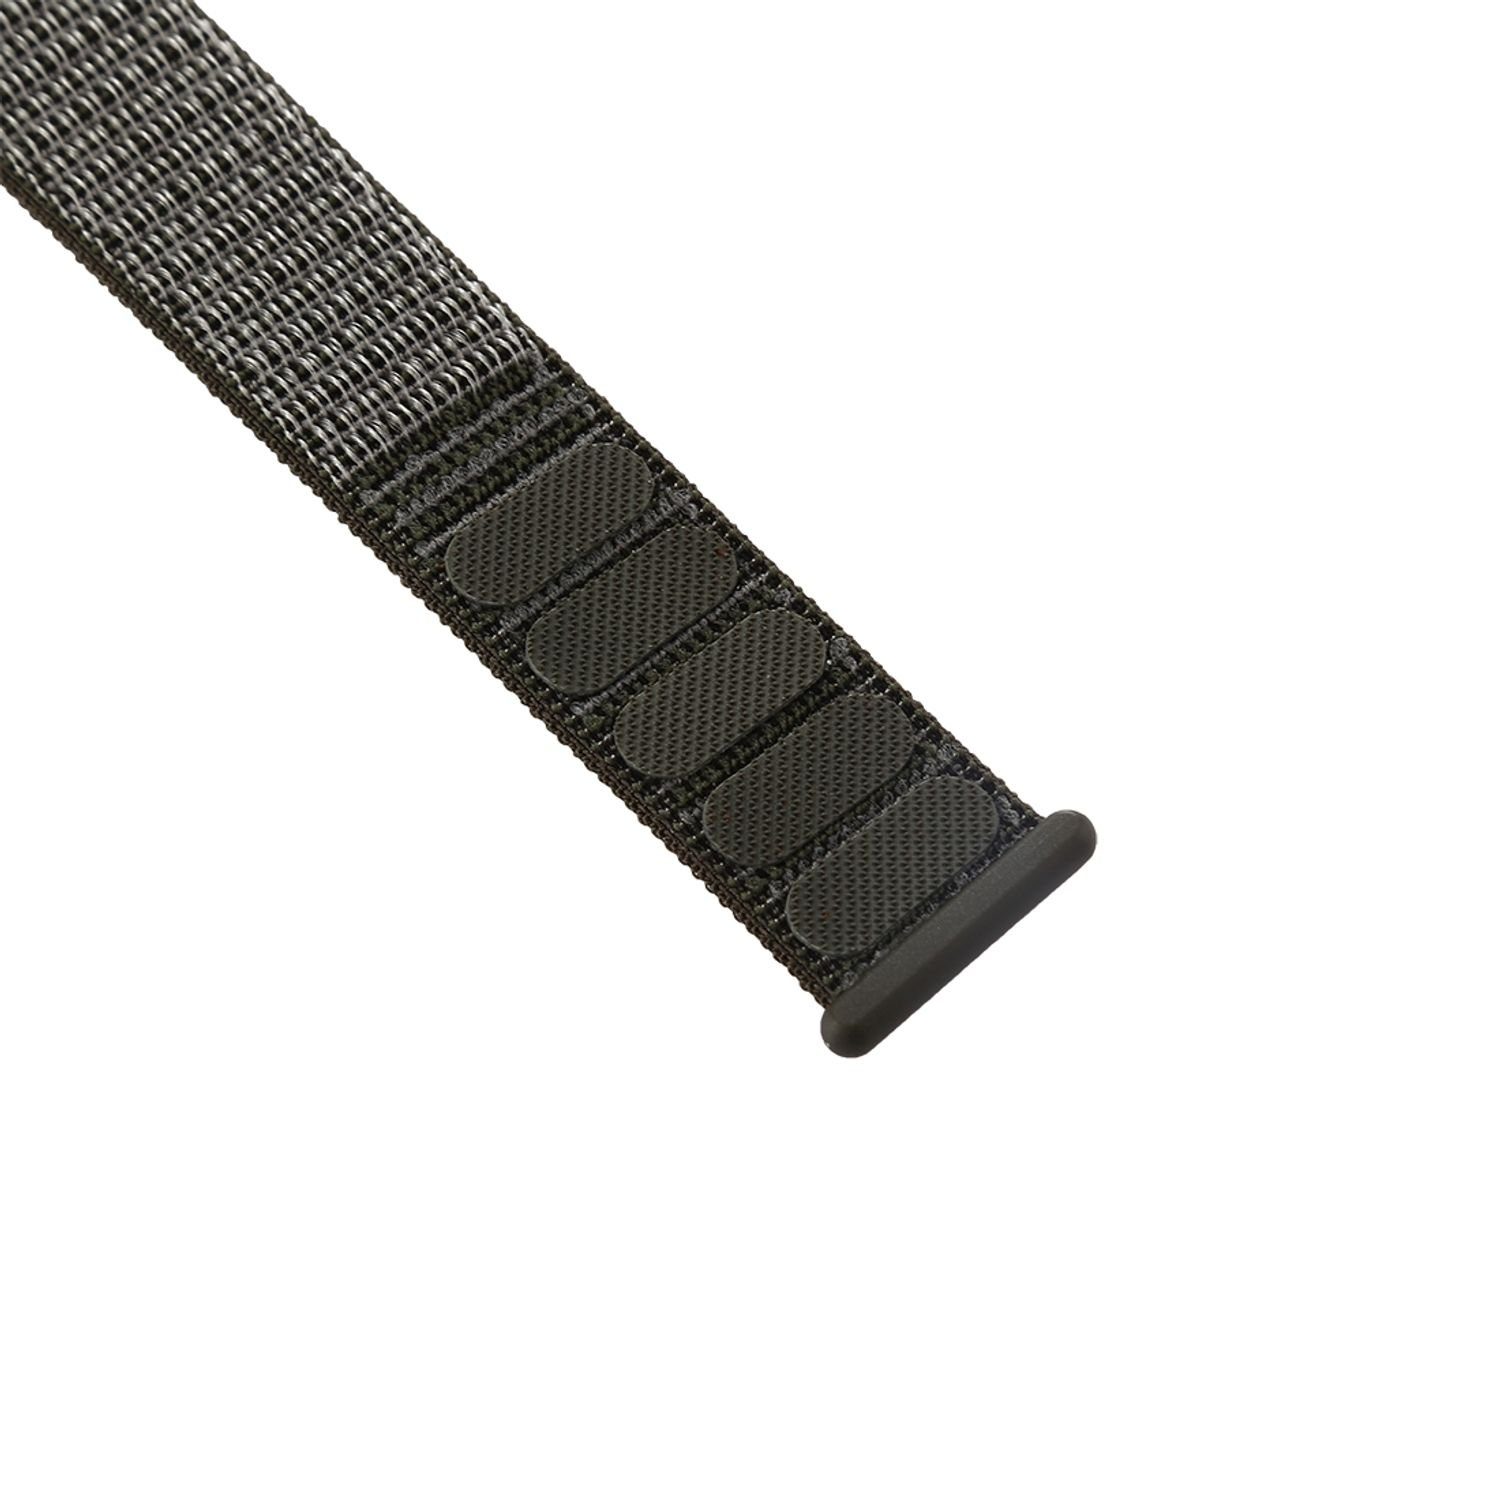 König Arm mm Design Band Loop 41 mm mm, Sport 40 / Armband Nylon 38 Smartwatch-Armband Grau /